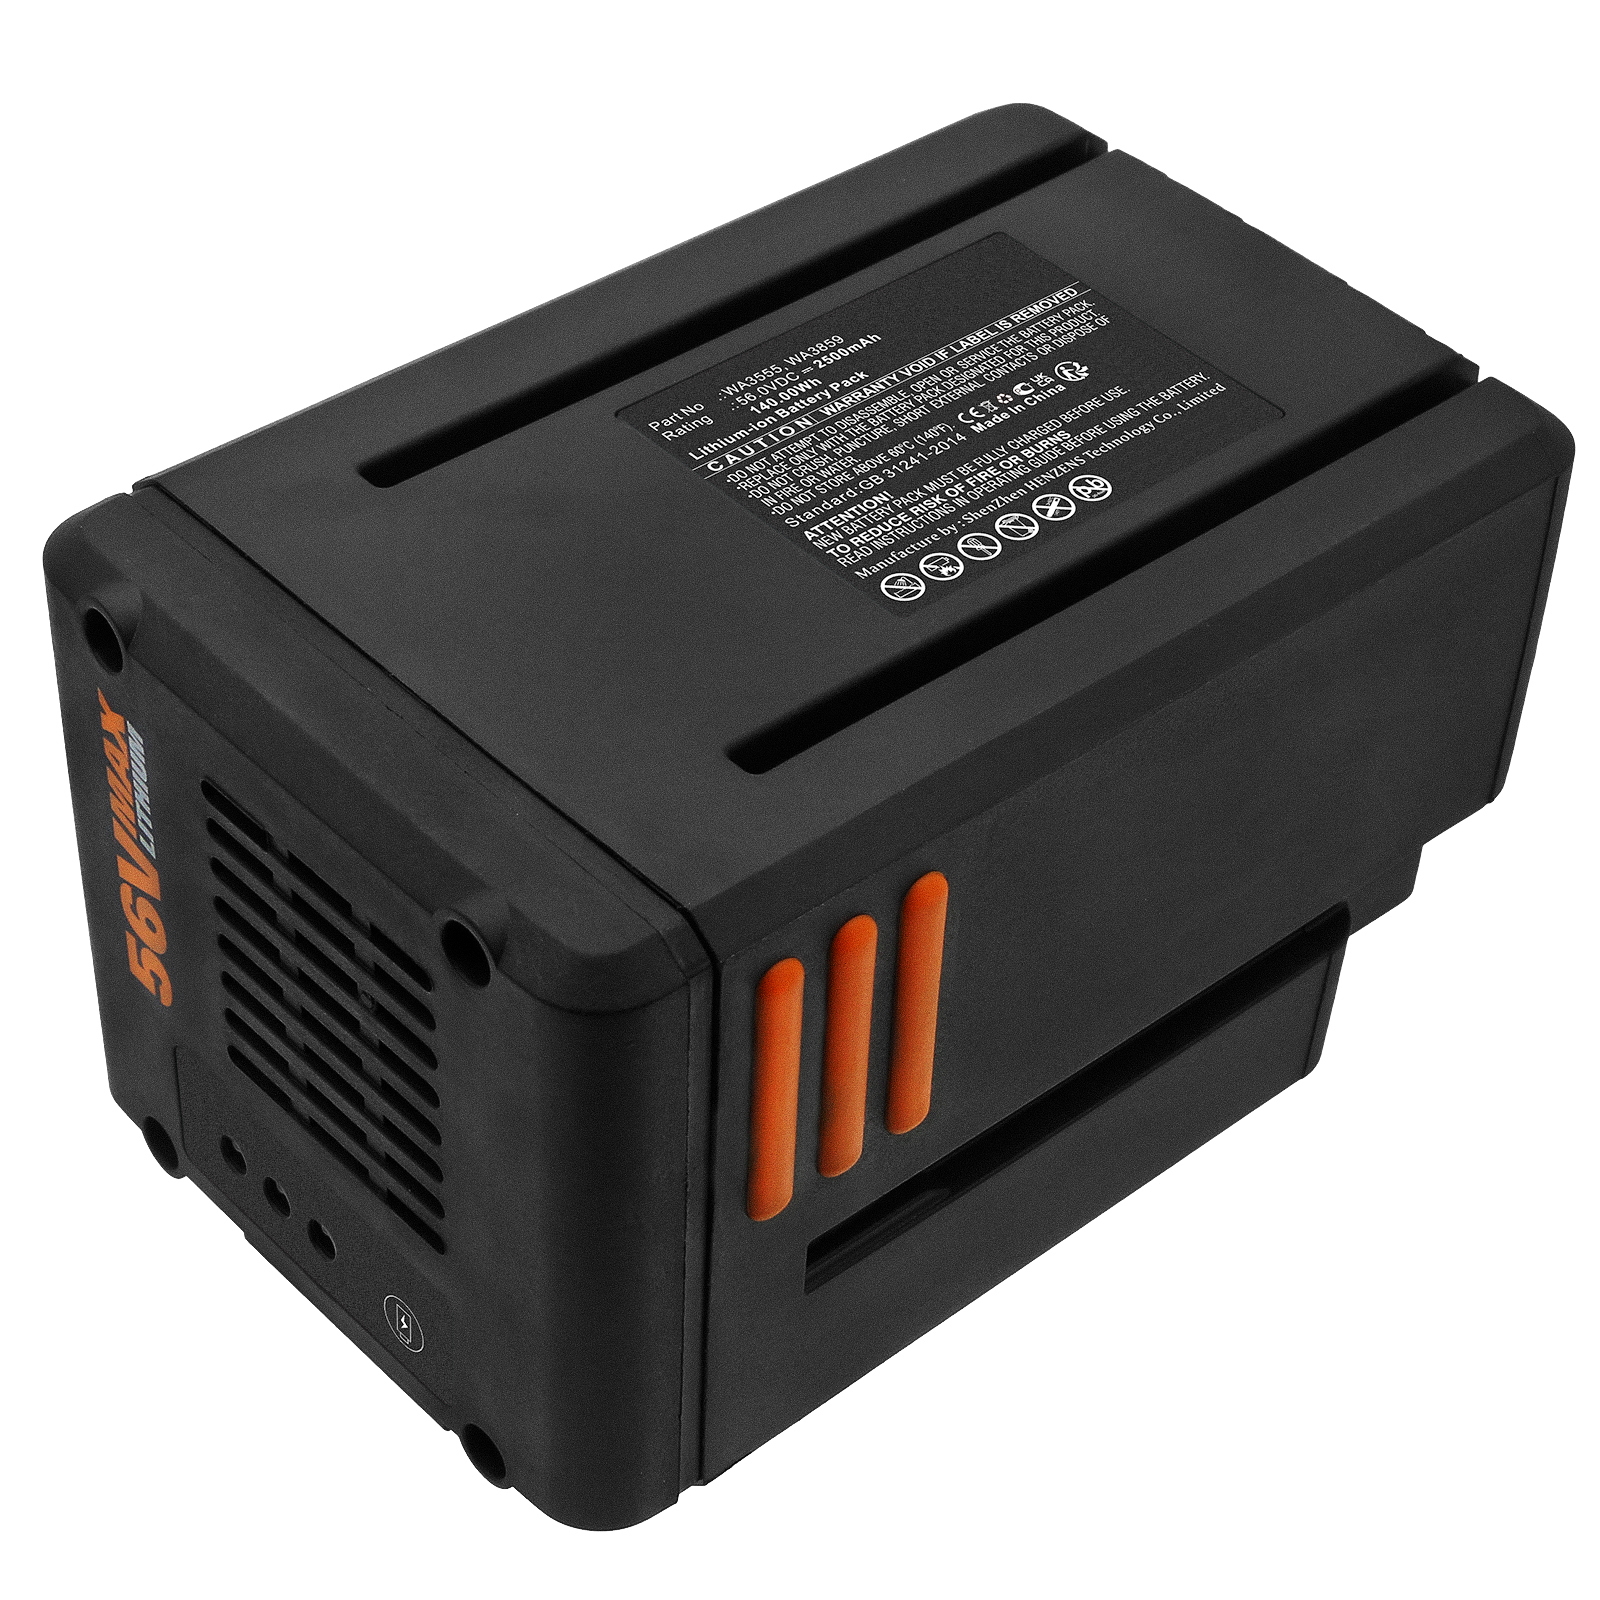 Synergy Digital Lawn Mower Battery, Compatible with Worx WA3555 Lawn Mower Battery (Li-ion, 56V, 2500mAh)